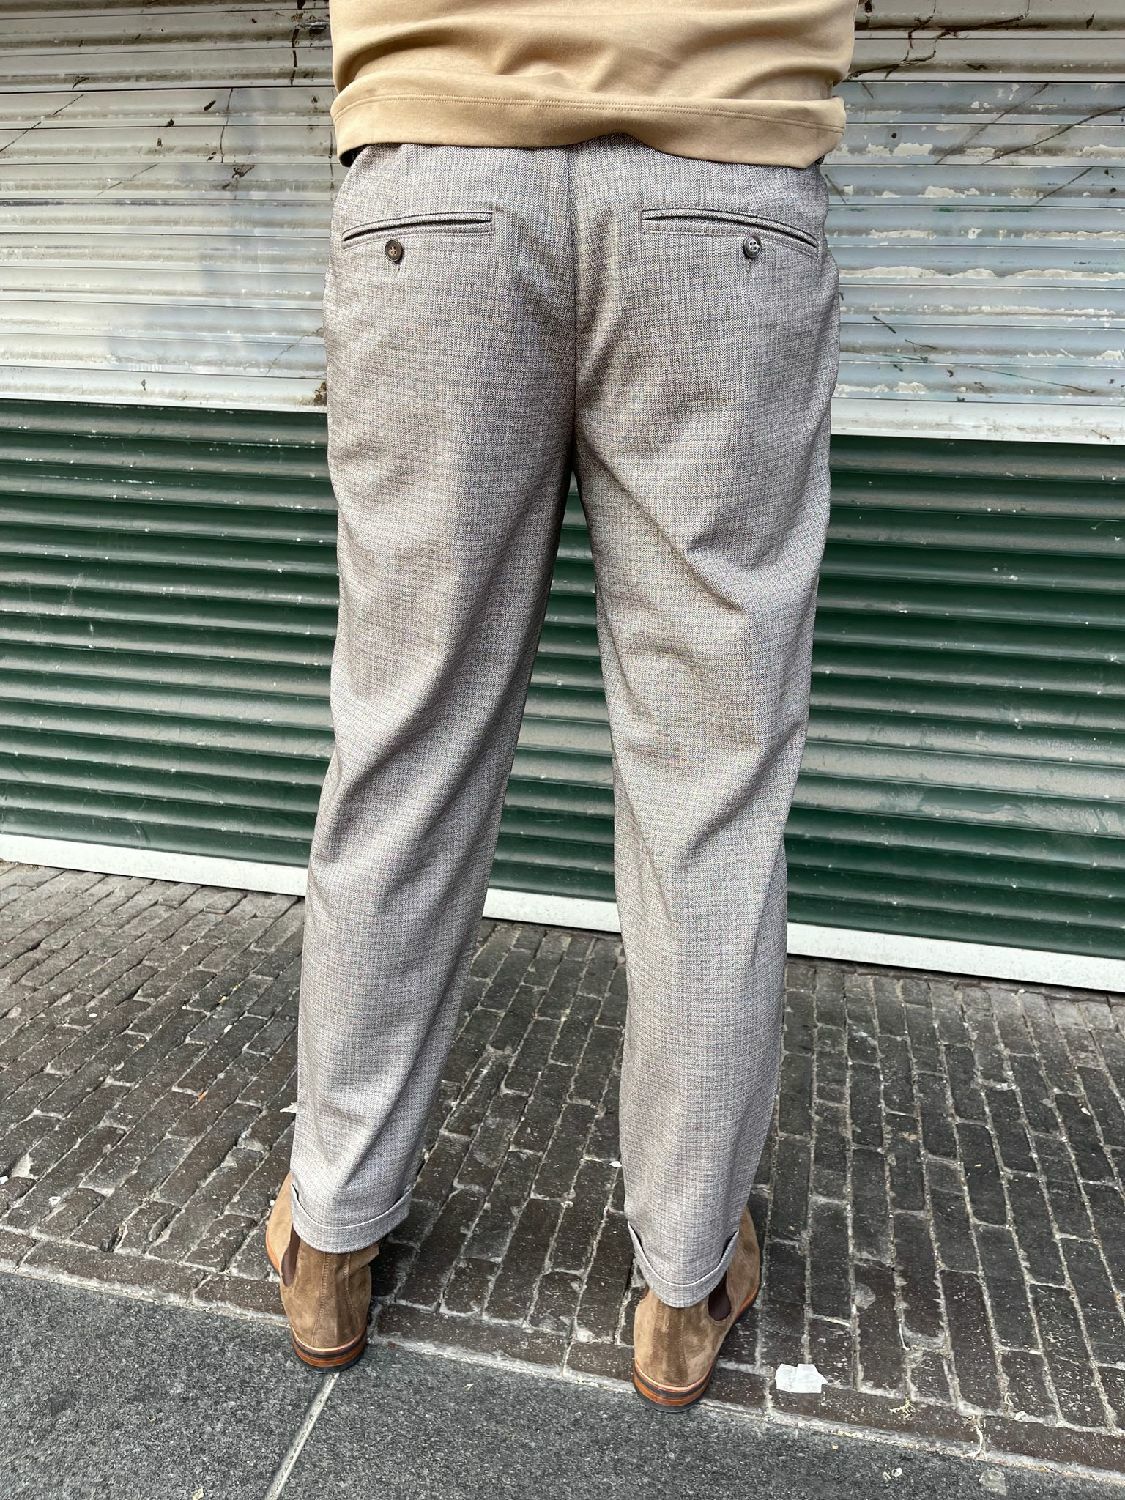 Duwen bezig fluctueren Plain heren broek Arthur 02399 online kopen bij No Sense. ARTHUR489-02399 |  Where jeans meet fashion